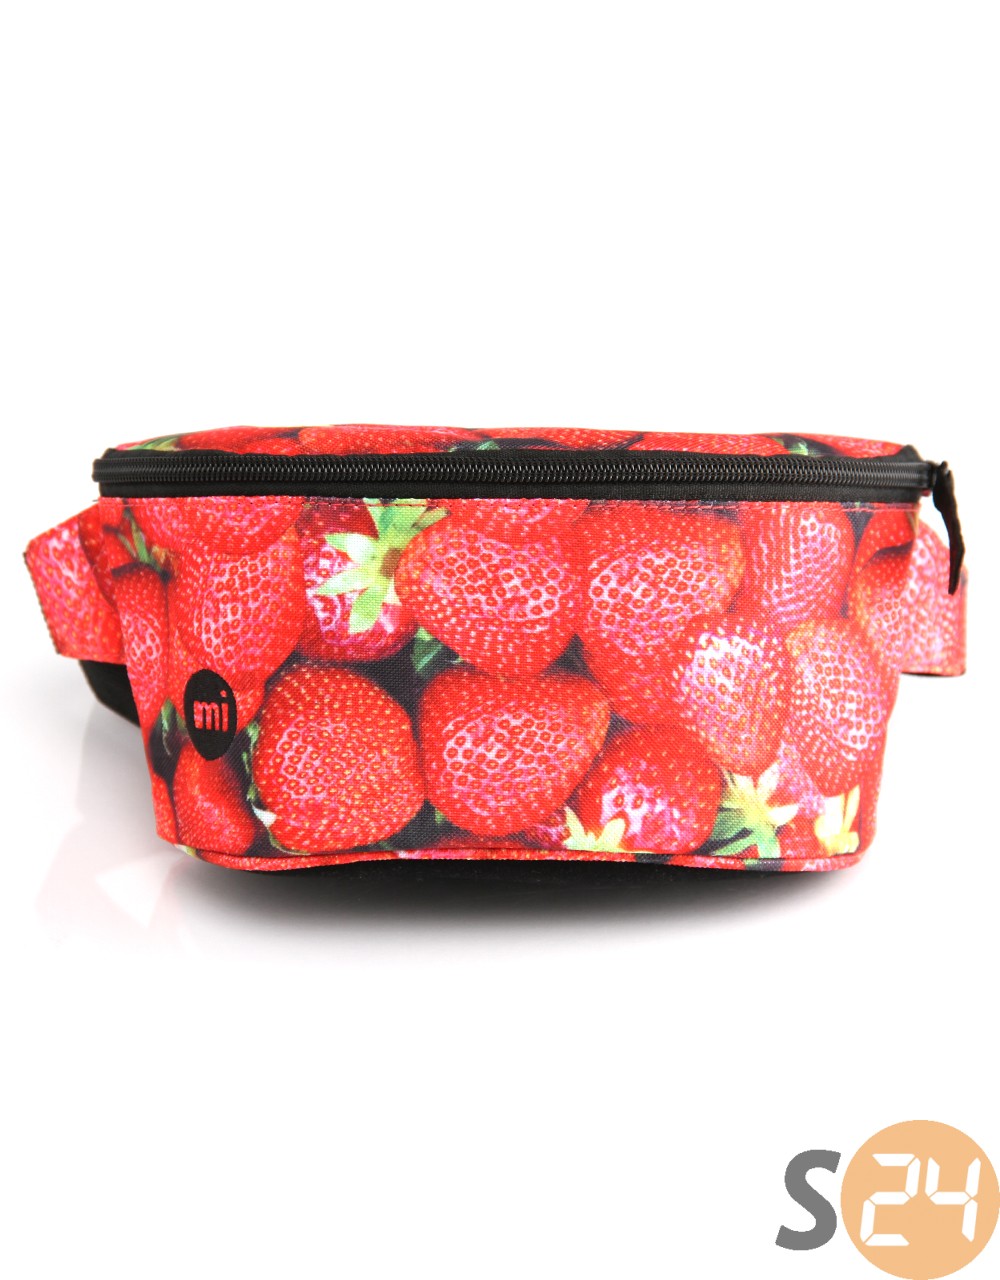 Mipac Övtáska Mi-pac bum bag strawberries red 742100-006